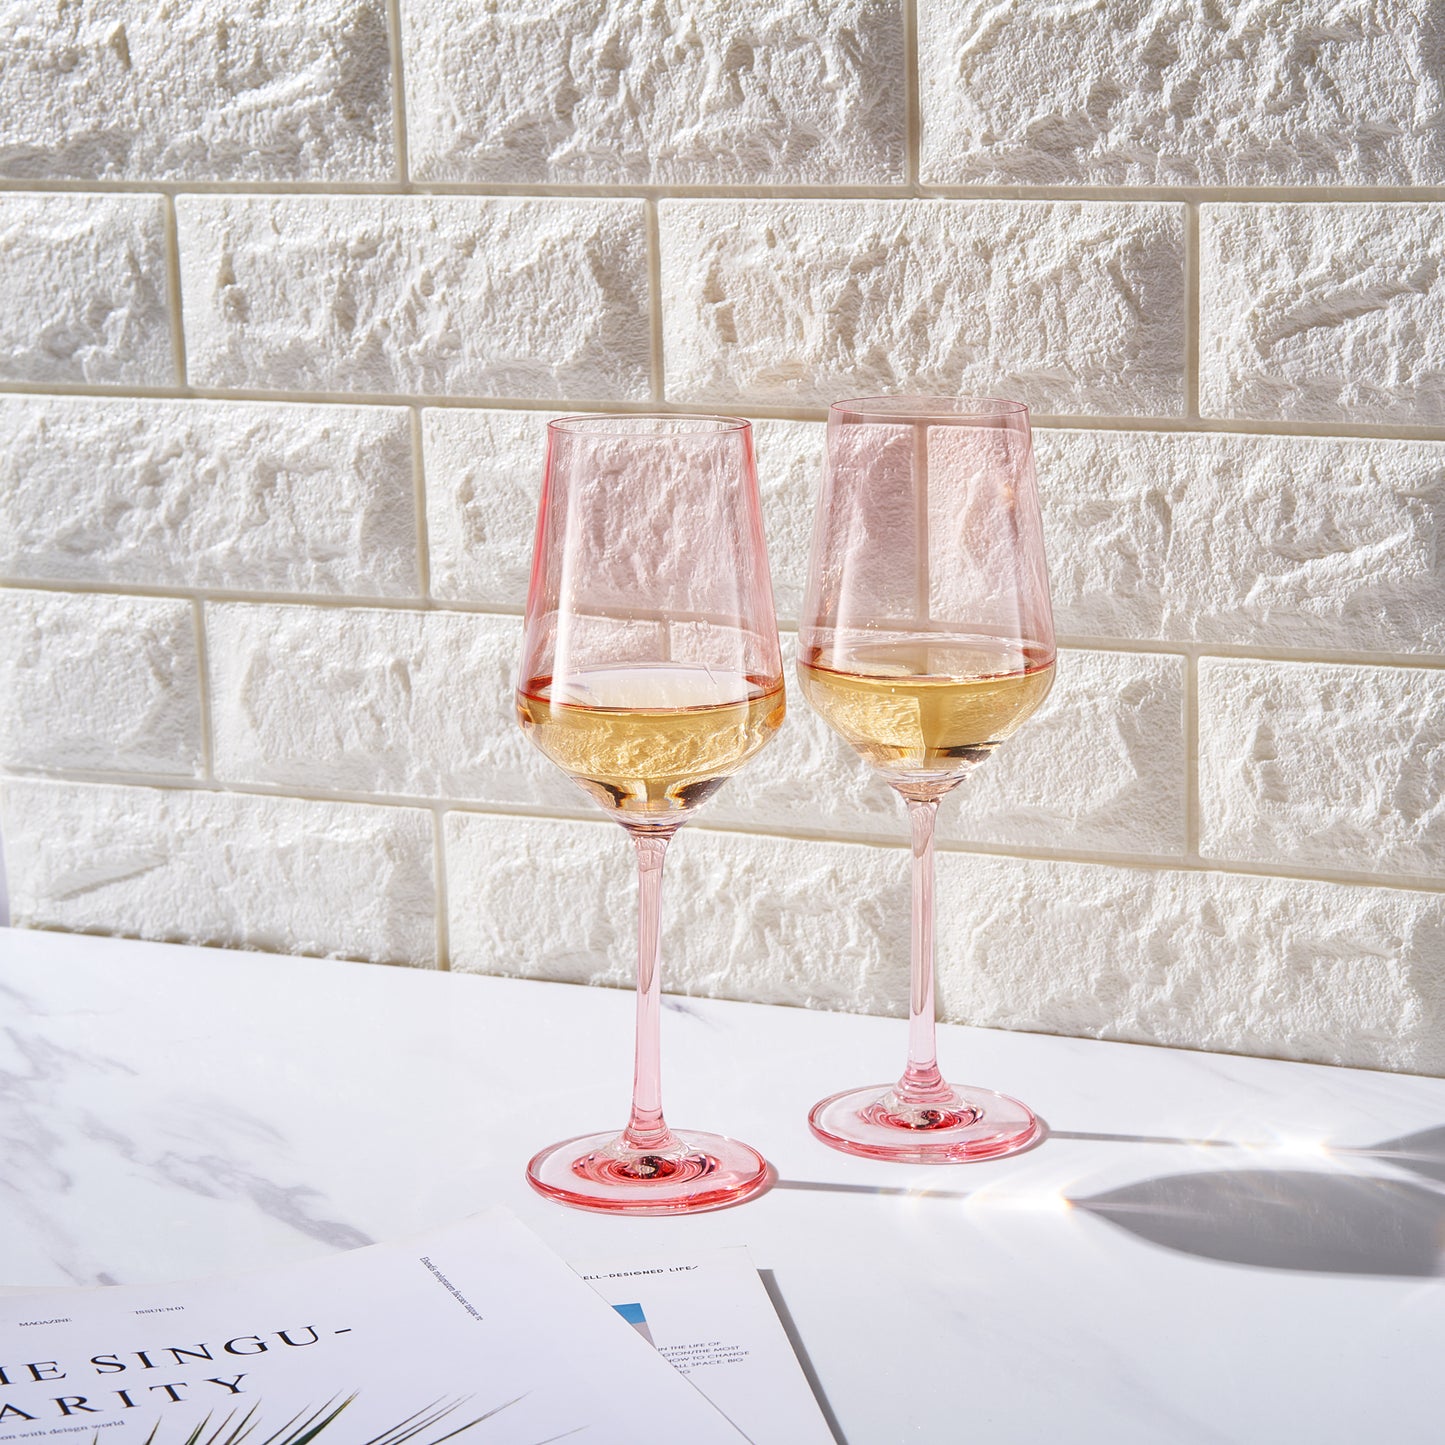 Monet Wine Glassware, Pink, Set of 2